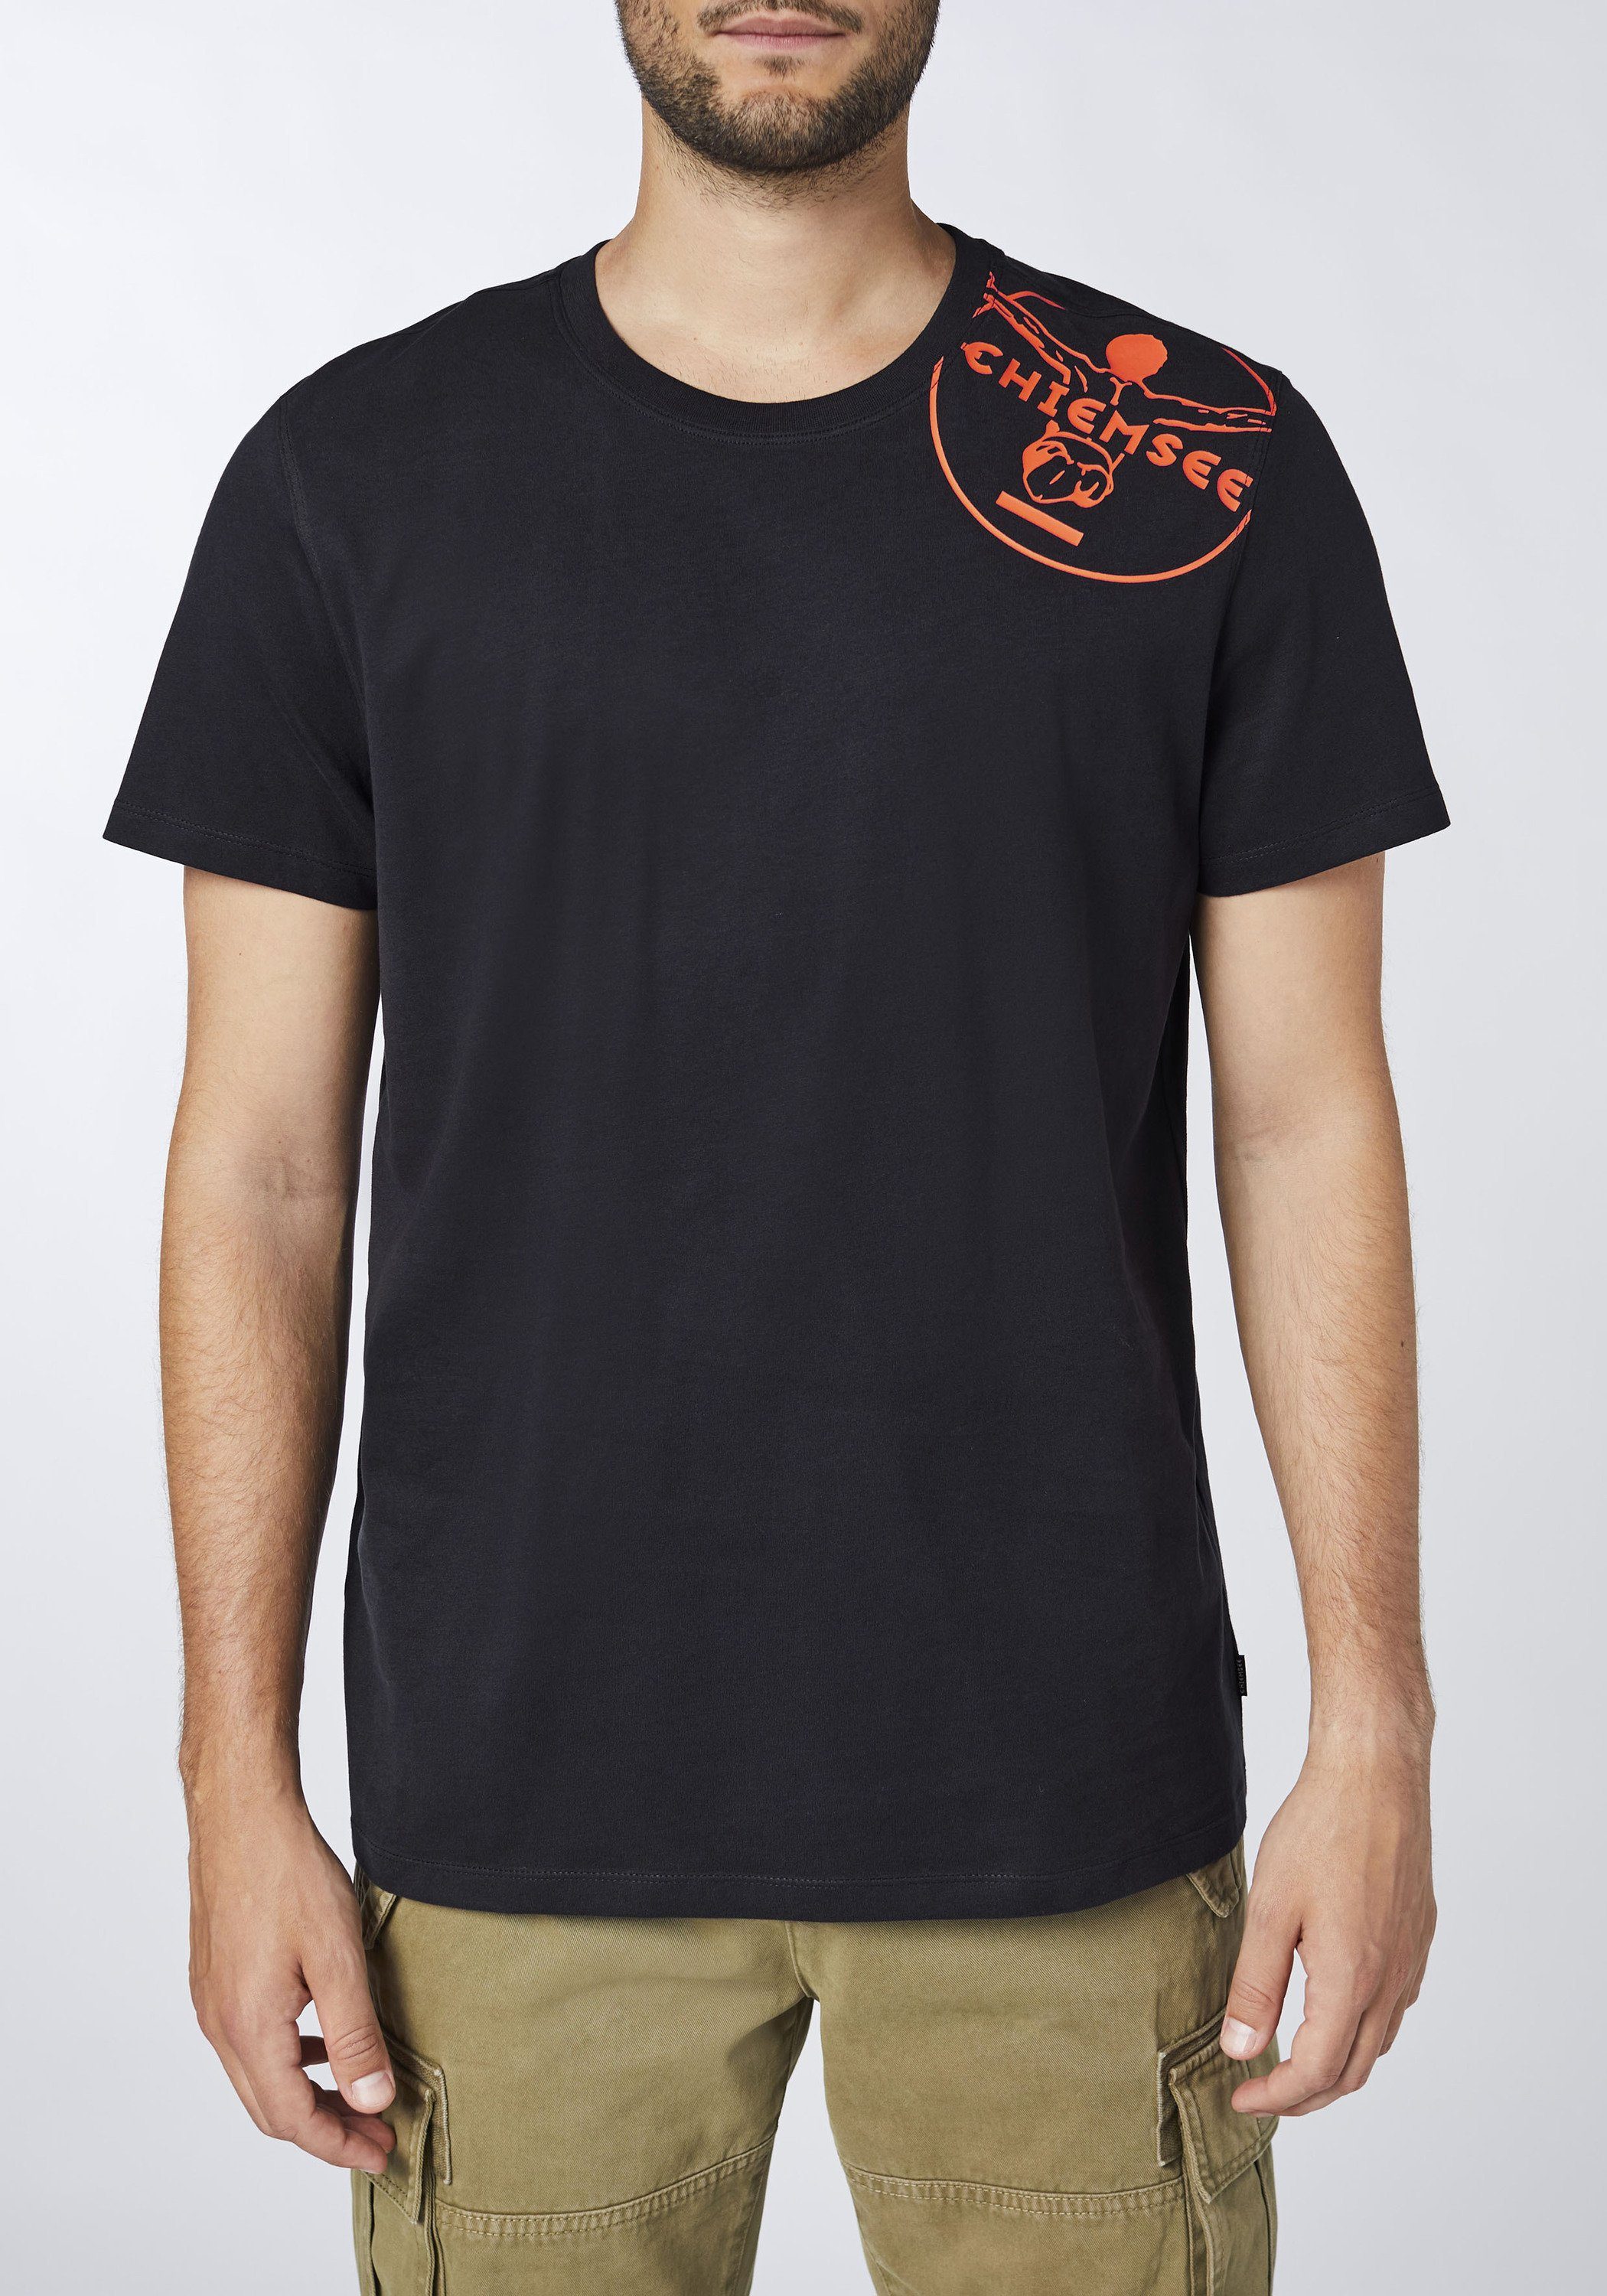 T-Shirt 1 mit Print-Shirt Jumper-Motiv Black Deep Chiemsee